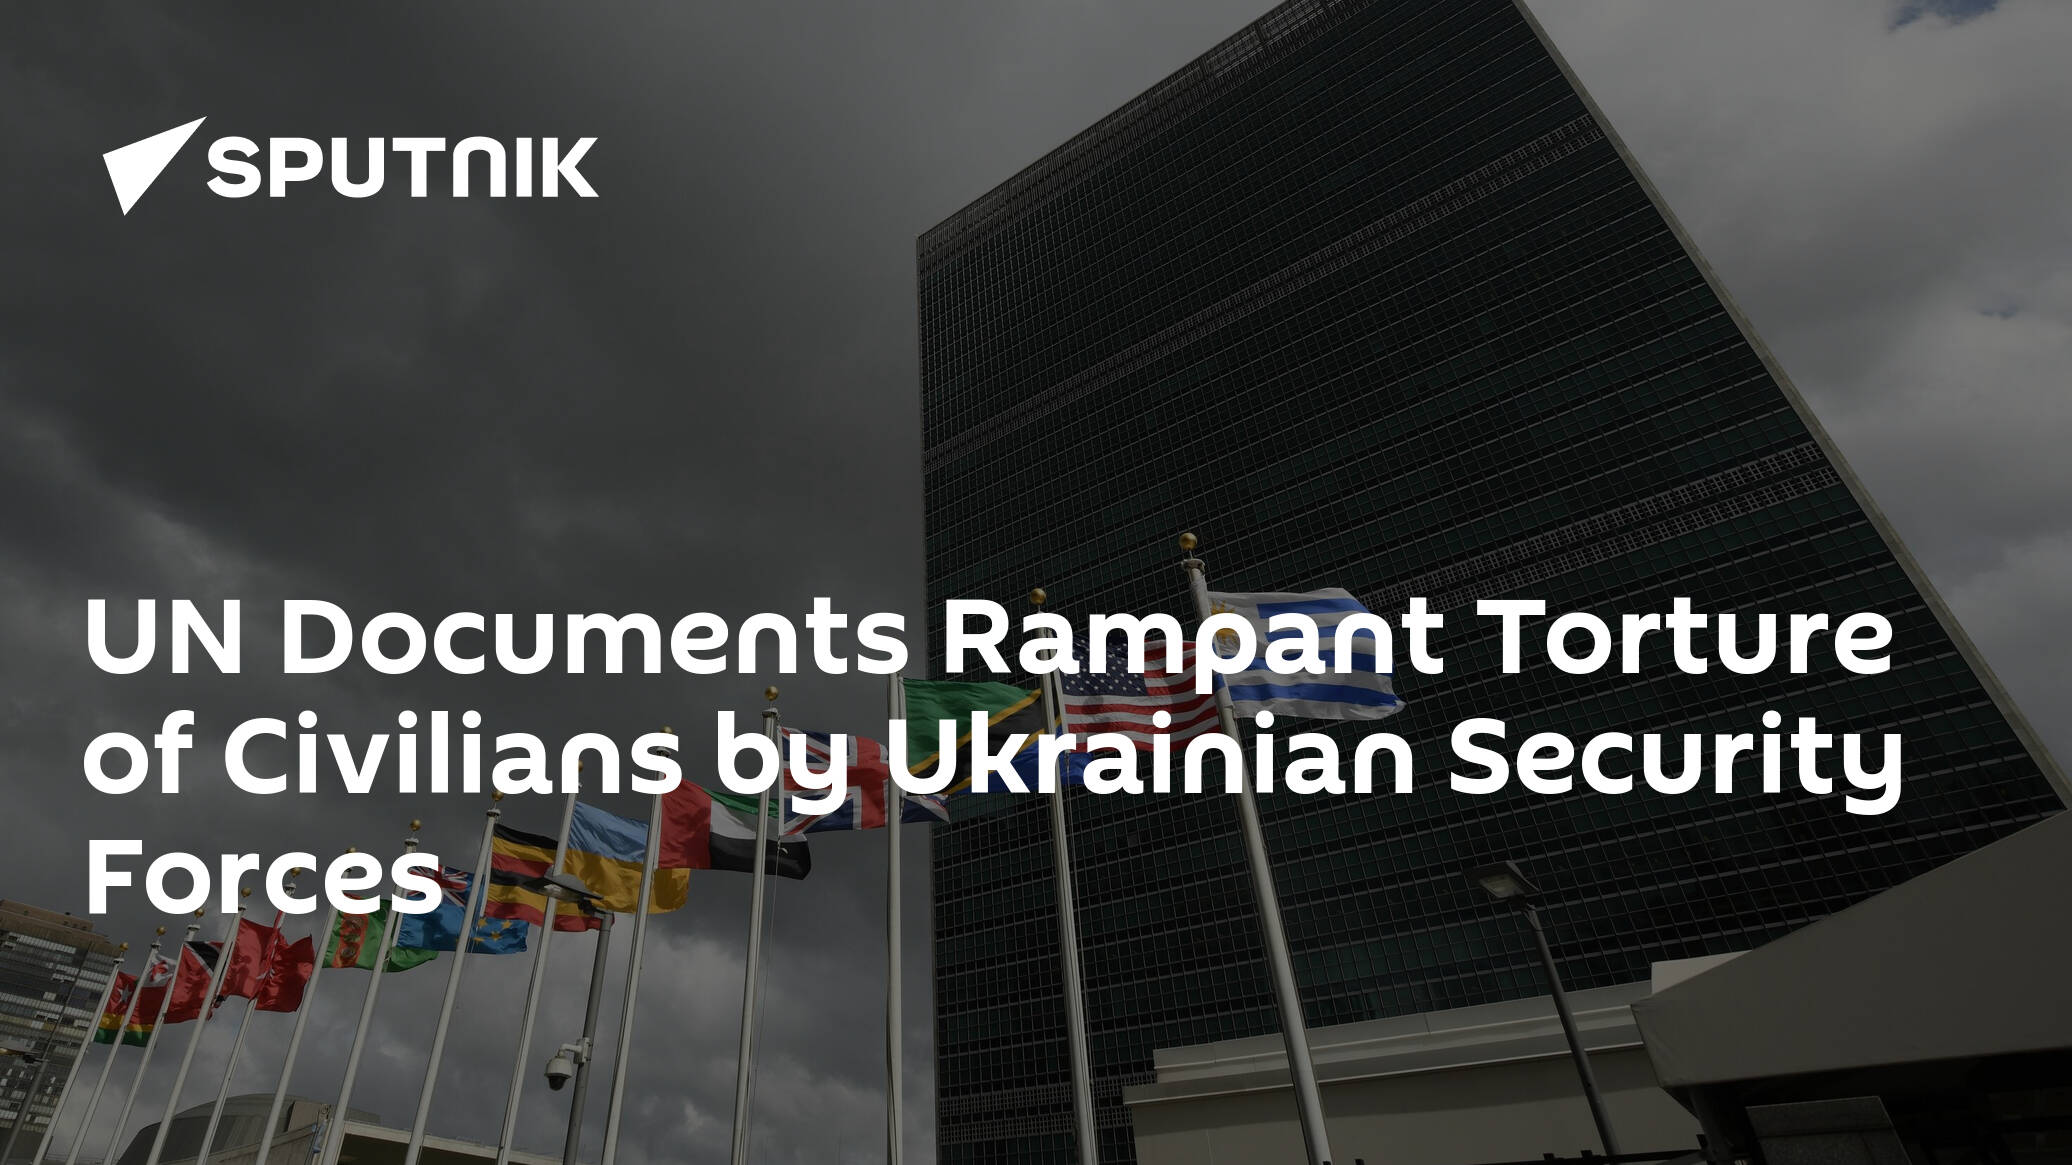 UN Records Increase in Law Violations by Ukrainian Security Forces